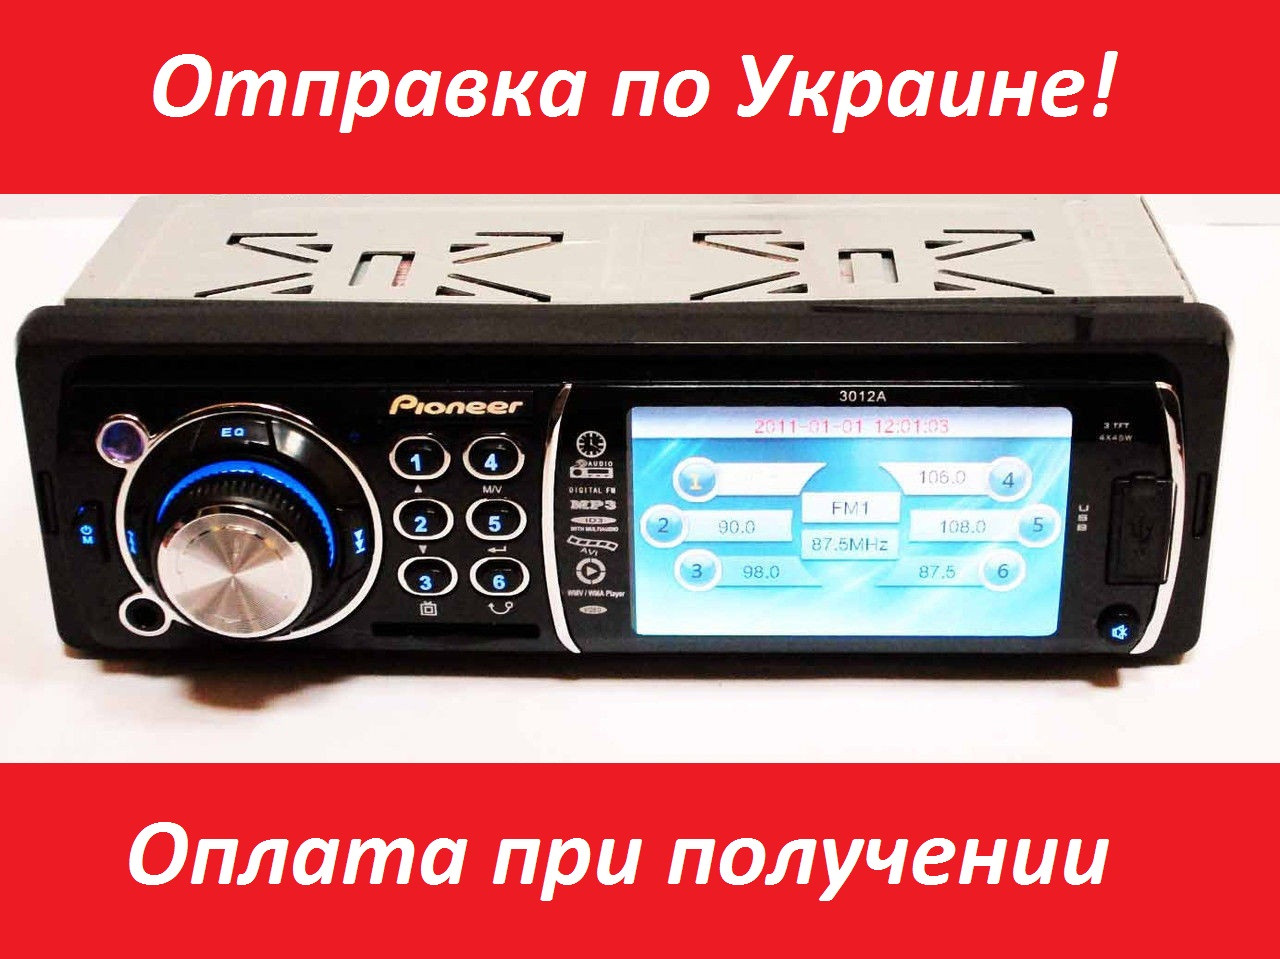 

Автомагнитола Pioneer 3012A LCD 3"_USB_SD_FM_AUX_ГАРАНТИЯ+ПУЛЬТ